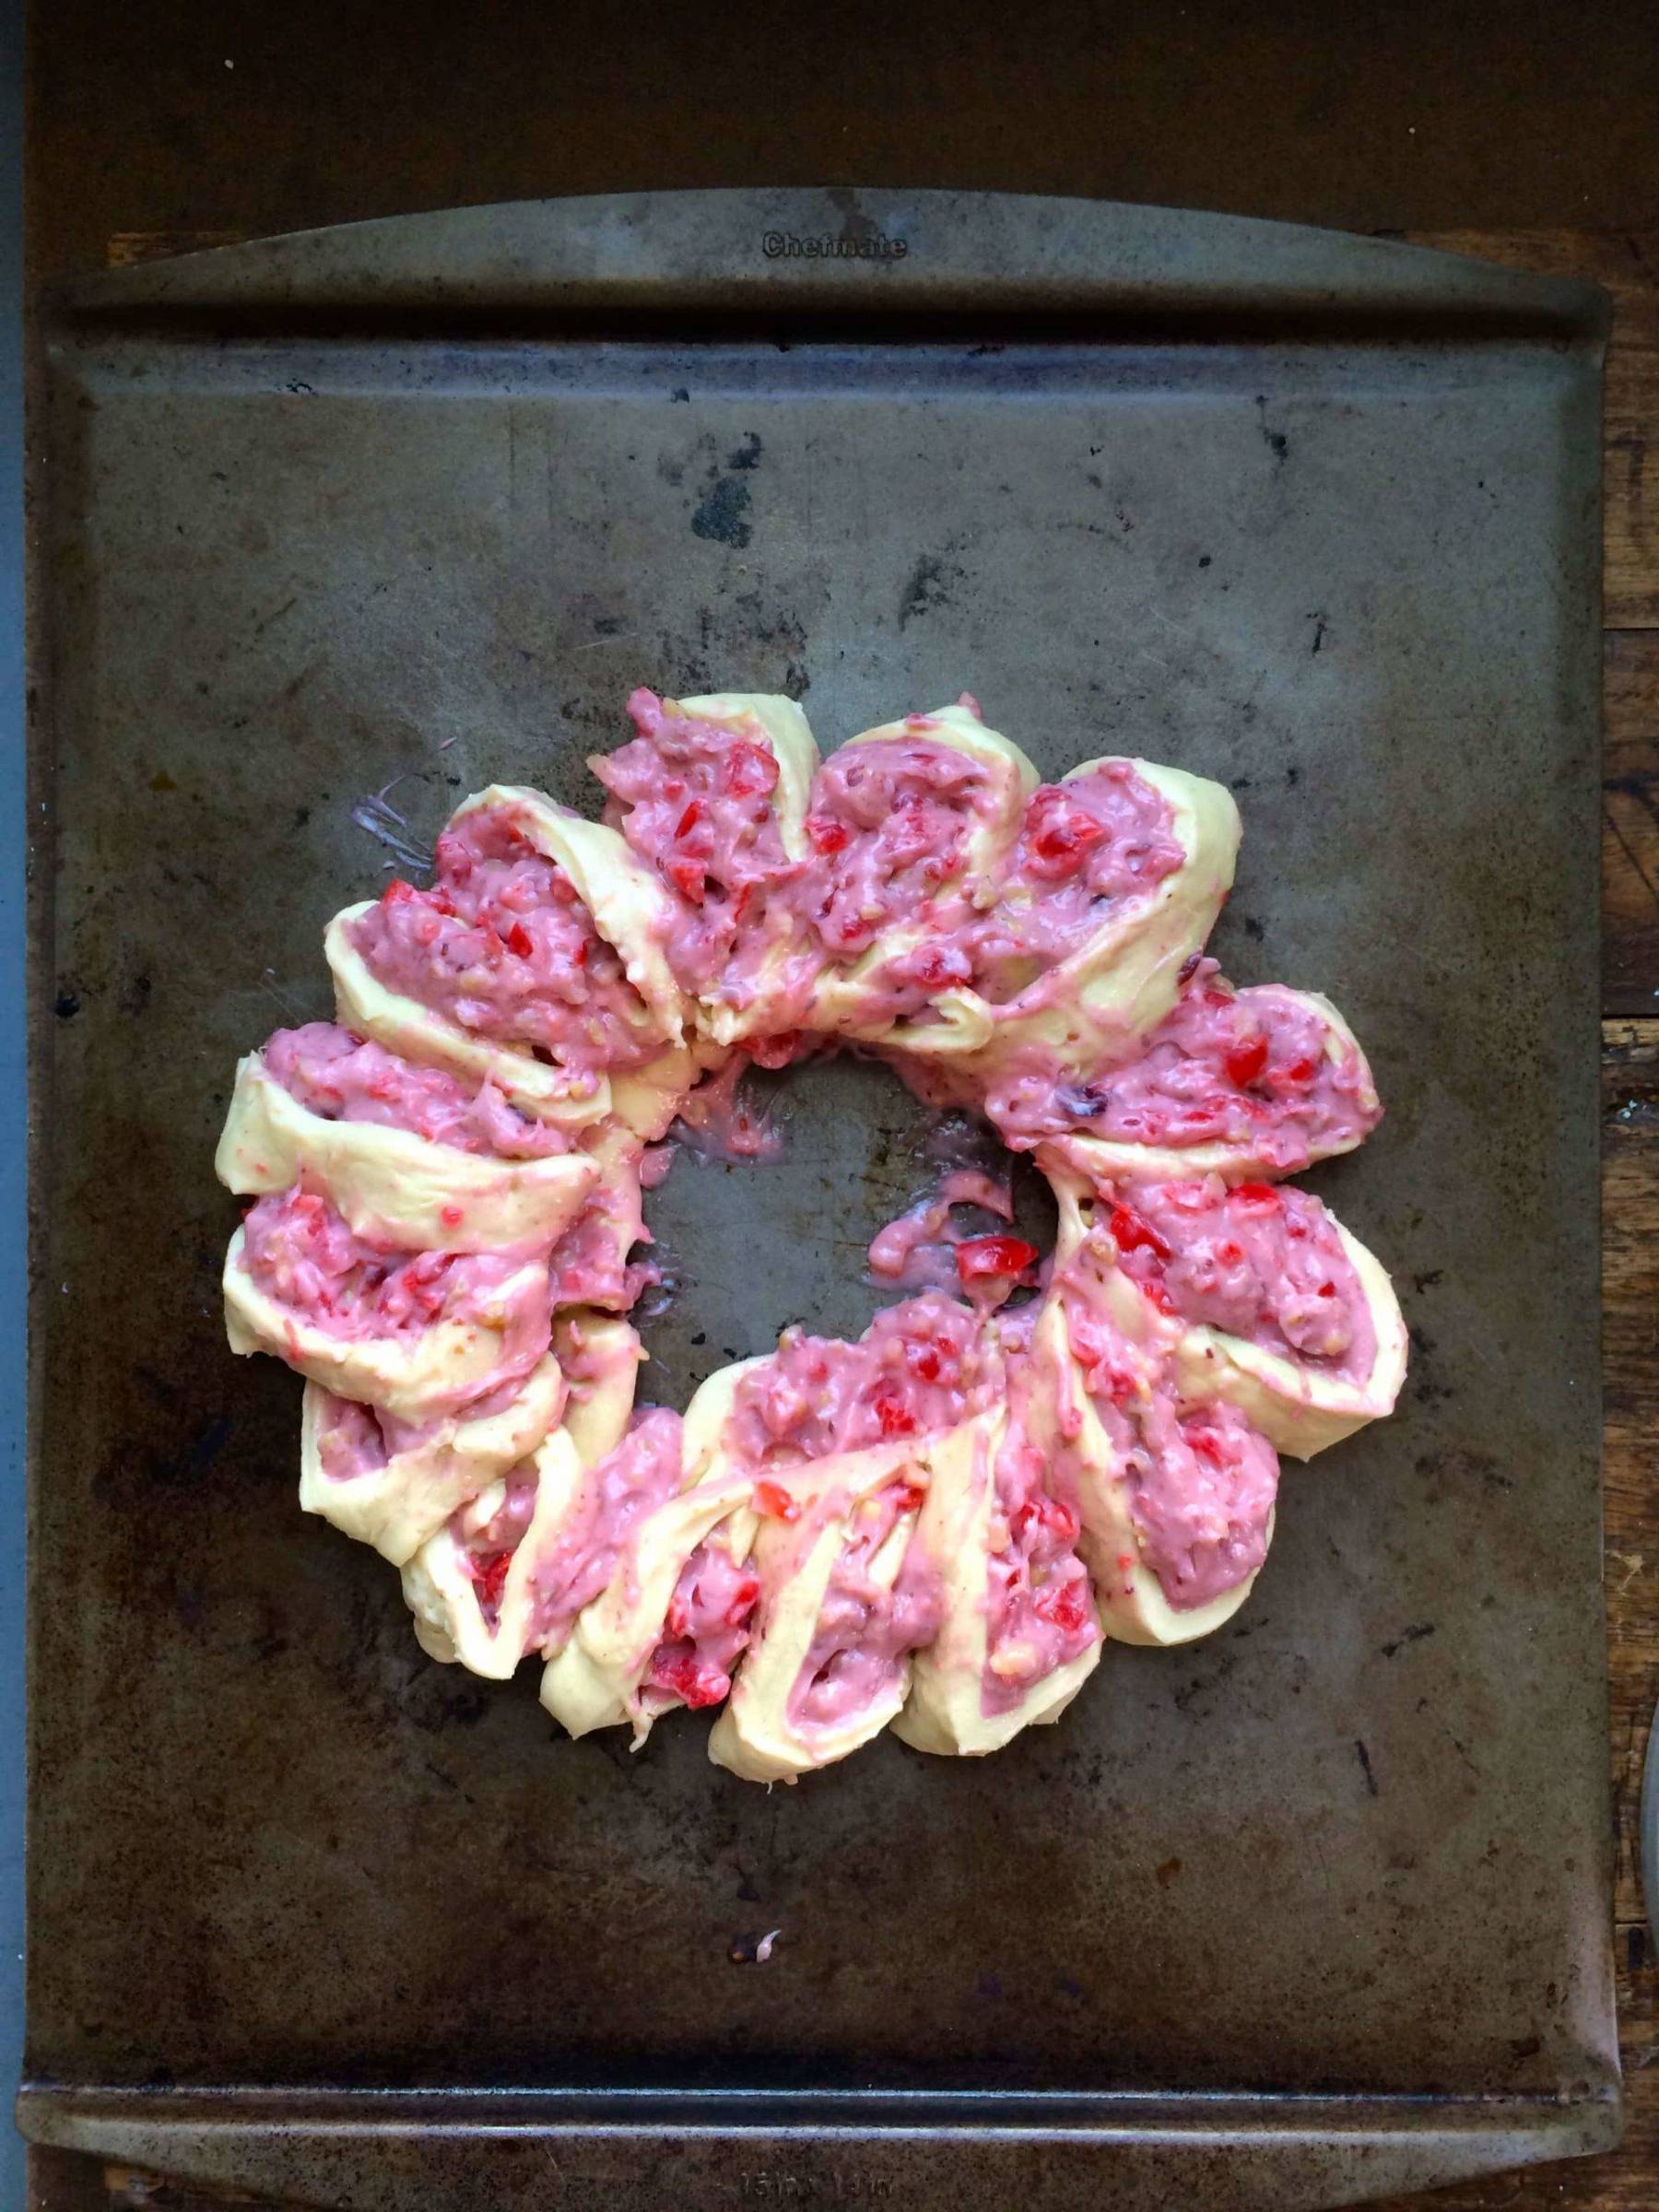 Pink bread dough on a pan.